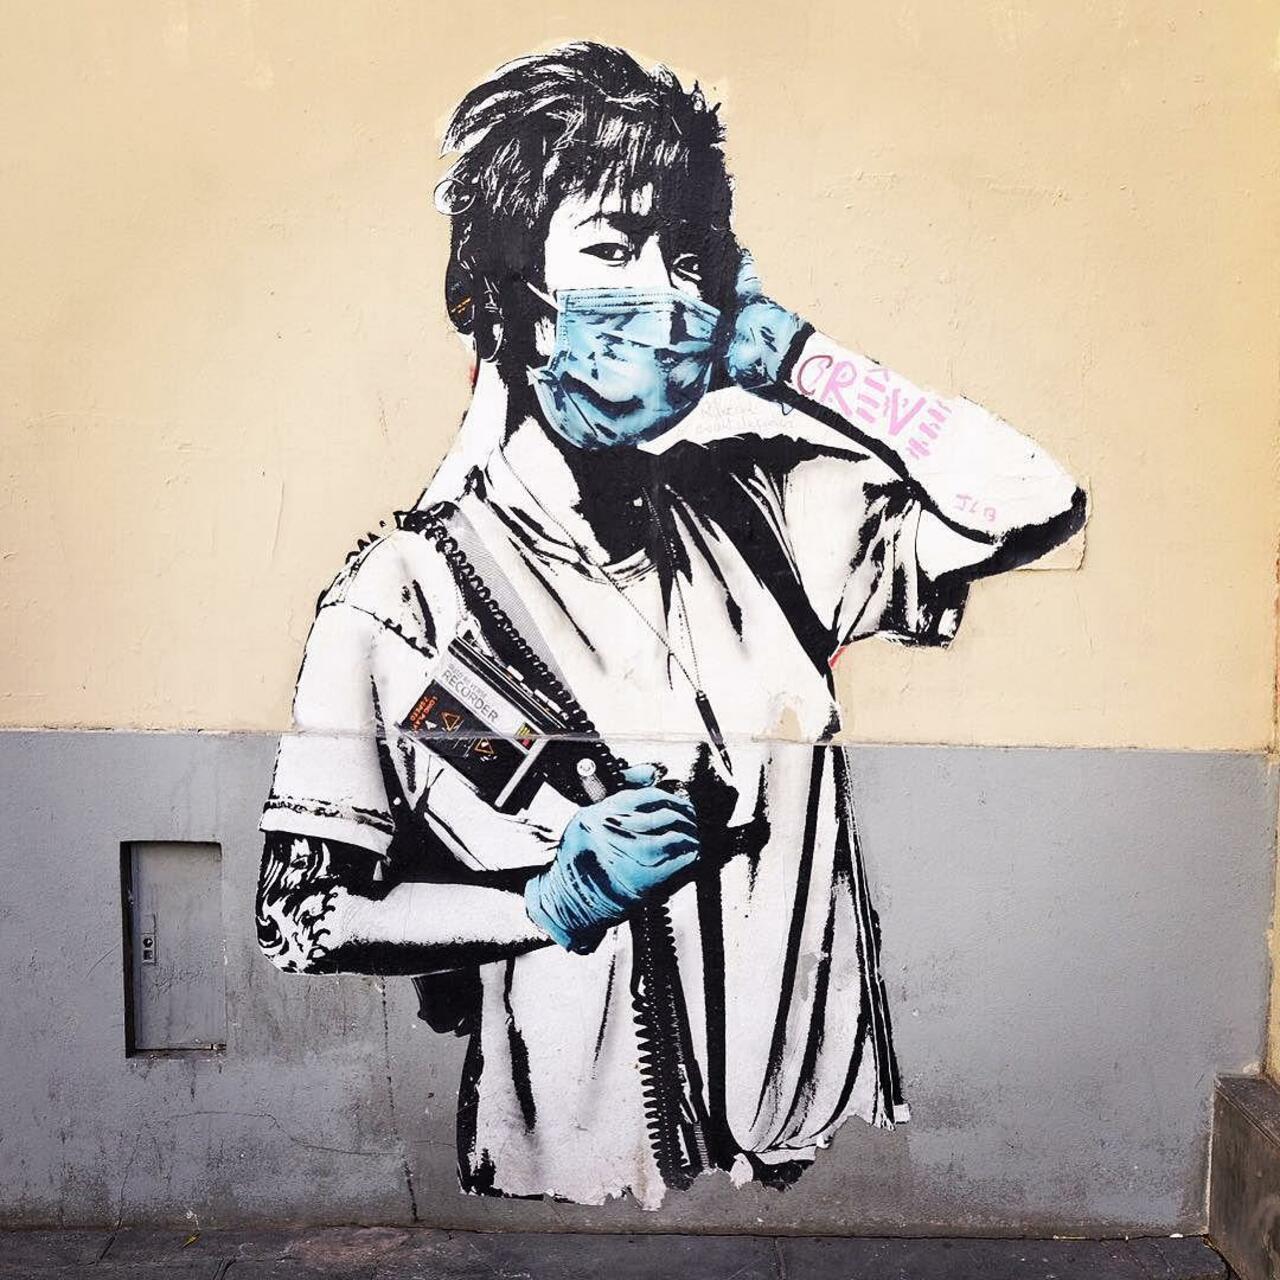 circumjacent_fr: #Paris #graffiti photo by mattbass http://ift.tt/1FGm3DL #StreetArt http://t.co/4i1YnGMMBE